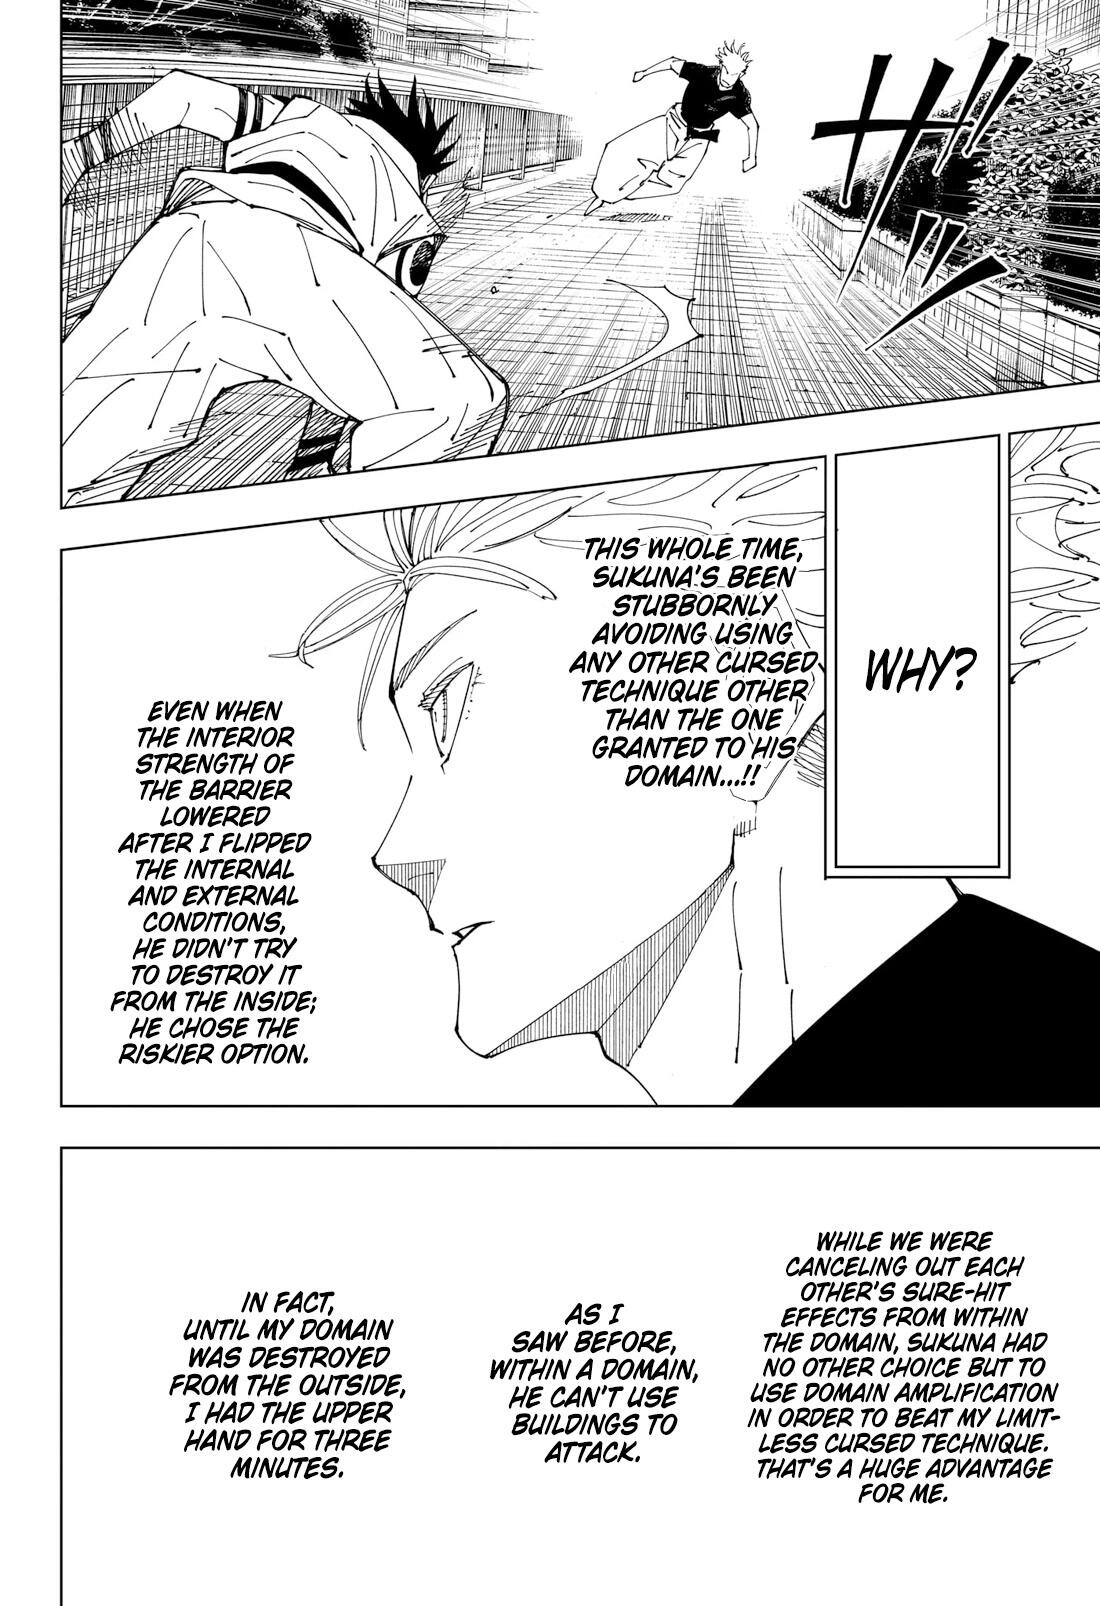 Jujutsu Kaisen Chapter 228: The Decisive Battle In The Uninhabited, Demon-Infested Shinjuku ⑥ page 18 - Mangakakalot